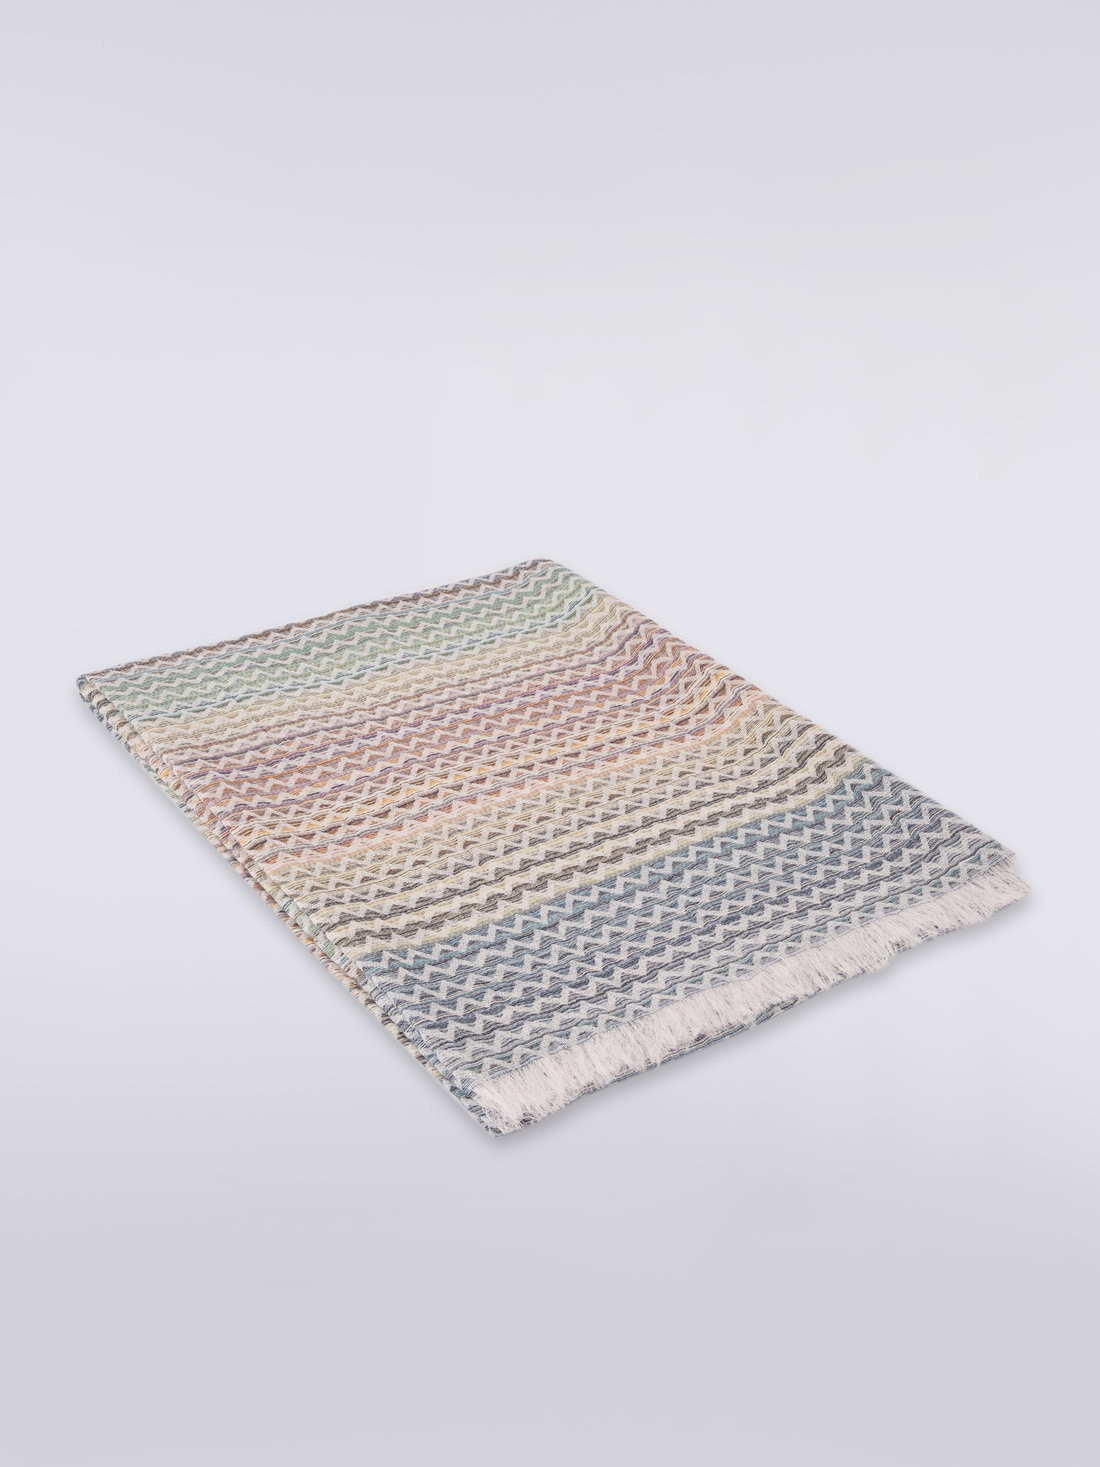 Simone plaid blanket 100x190 cm, Multicoloured  - 8051275111917 - 0